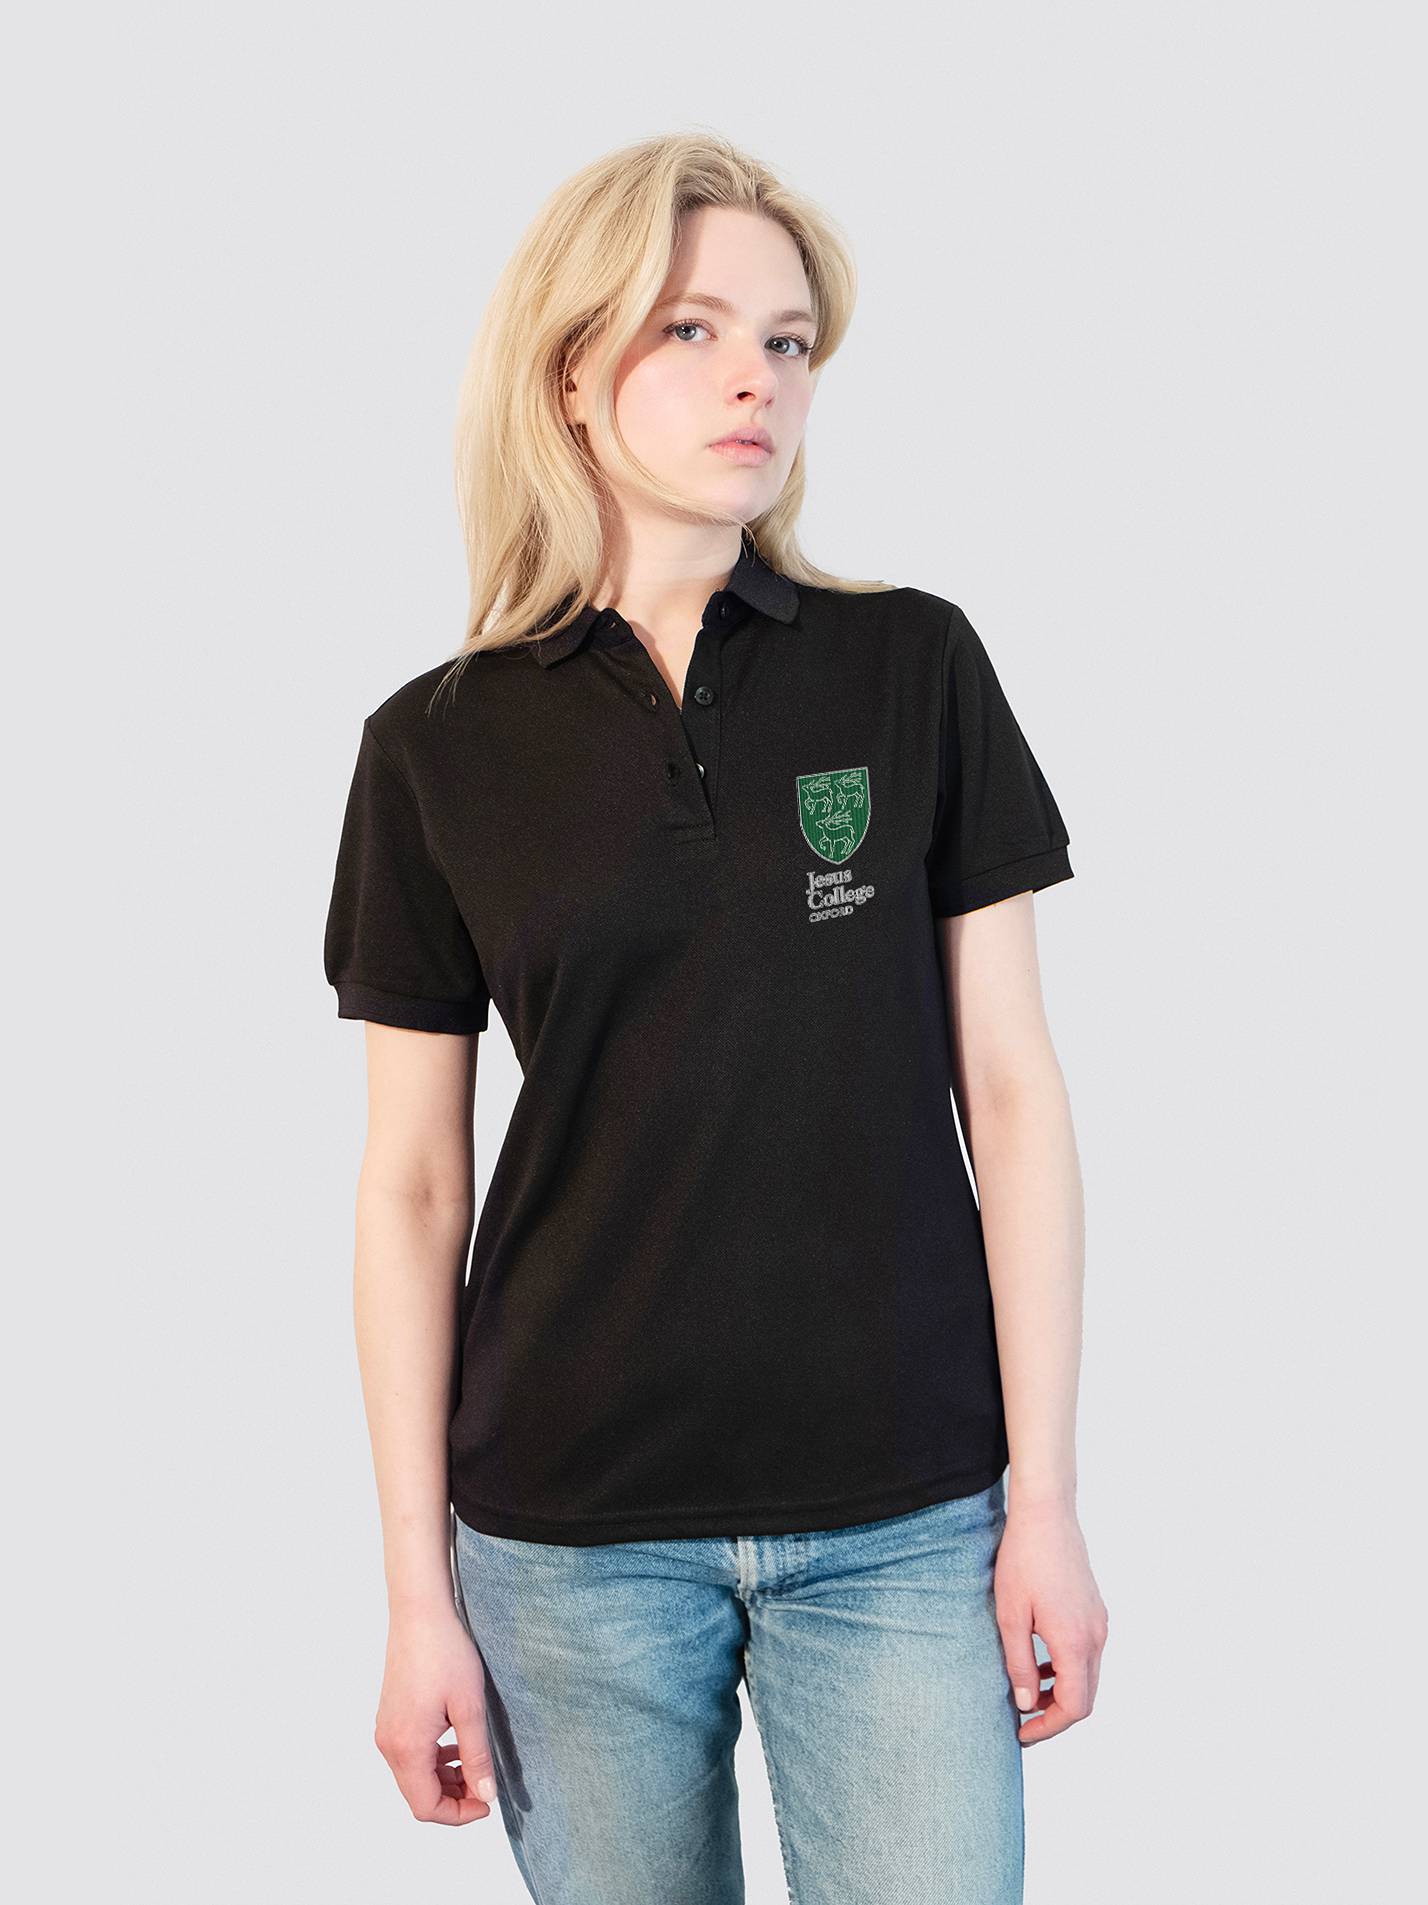 Jesus College Oxford Sustainable Ladies Polo Shirt